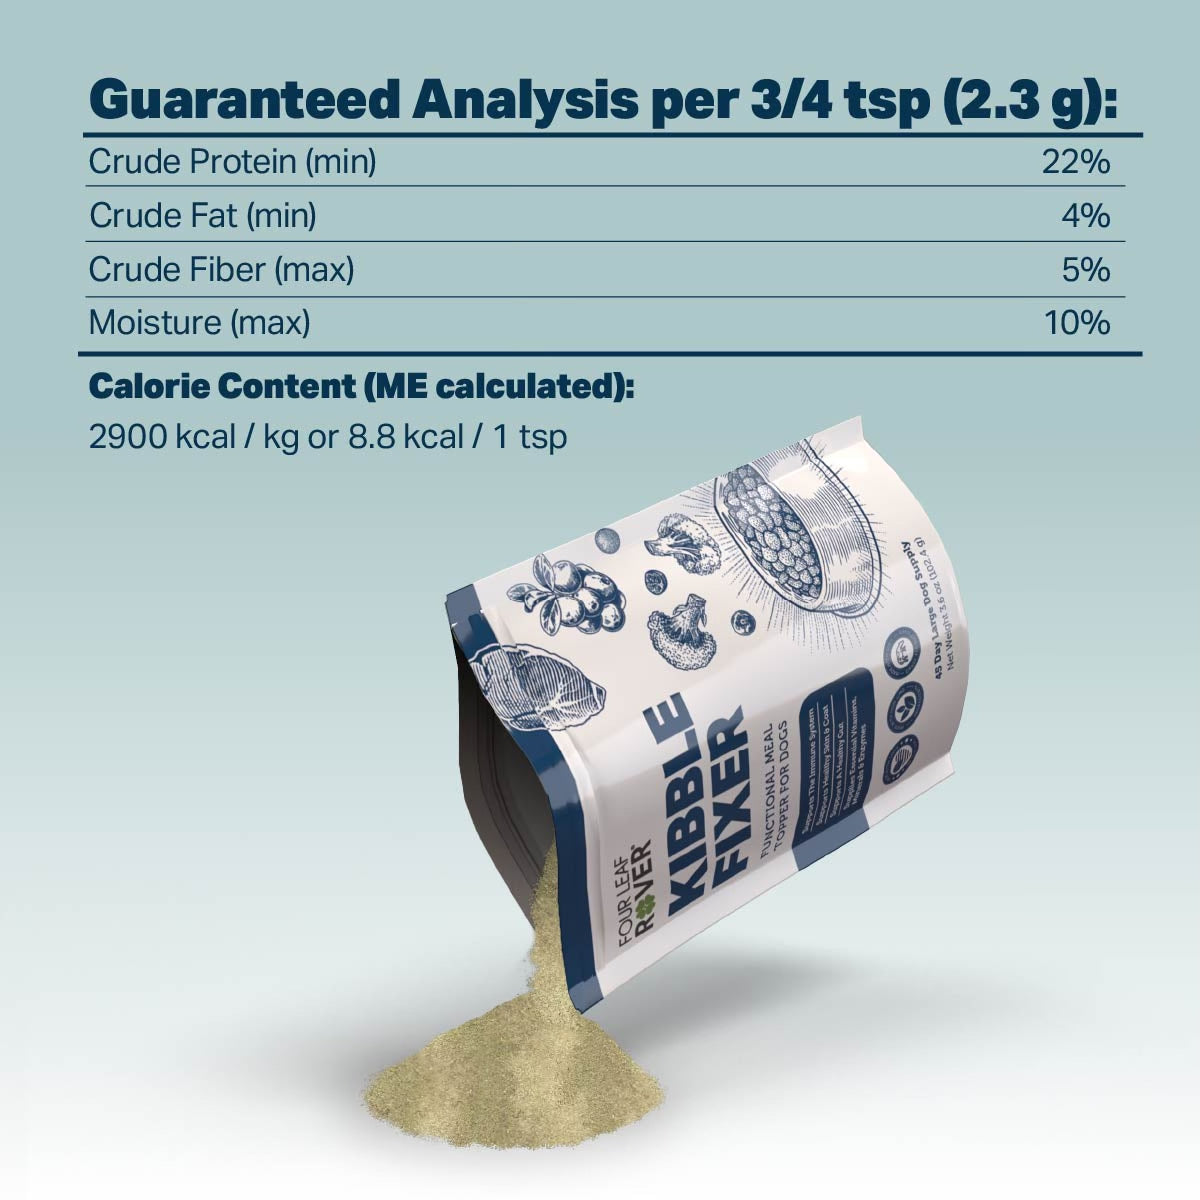 Guaranteed Analysis per 3/4 tsp (2.3g): Crude Protein (min) 22% Crude Fat (min) 4% Crude Fiber (max) 5% Moisture (max) 10% Calorie Content (ME calculated): 2900 kcal / kg or 8.8 kcal / 1 tsp